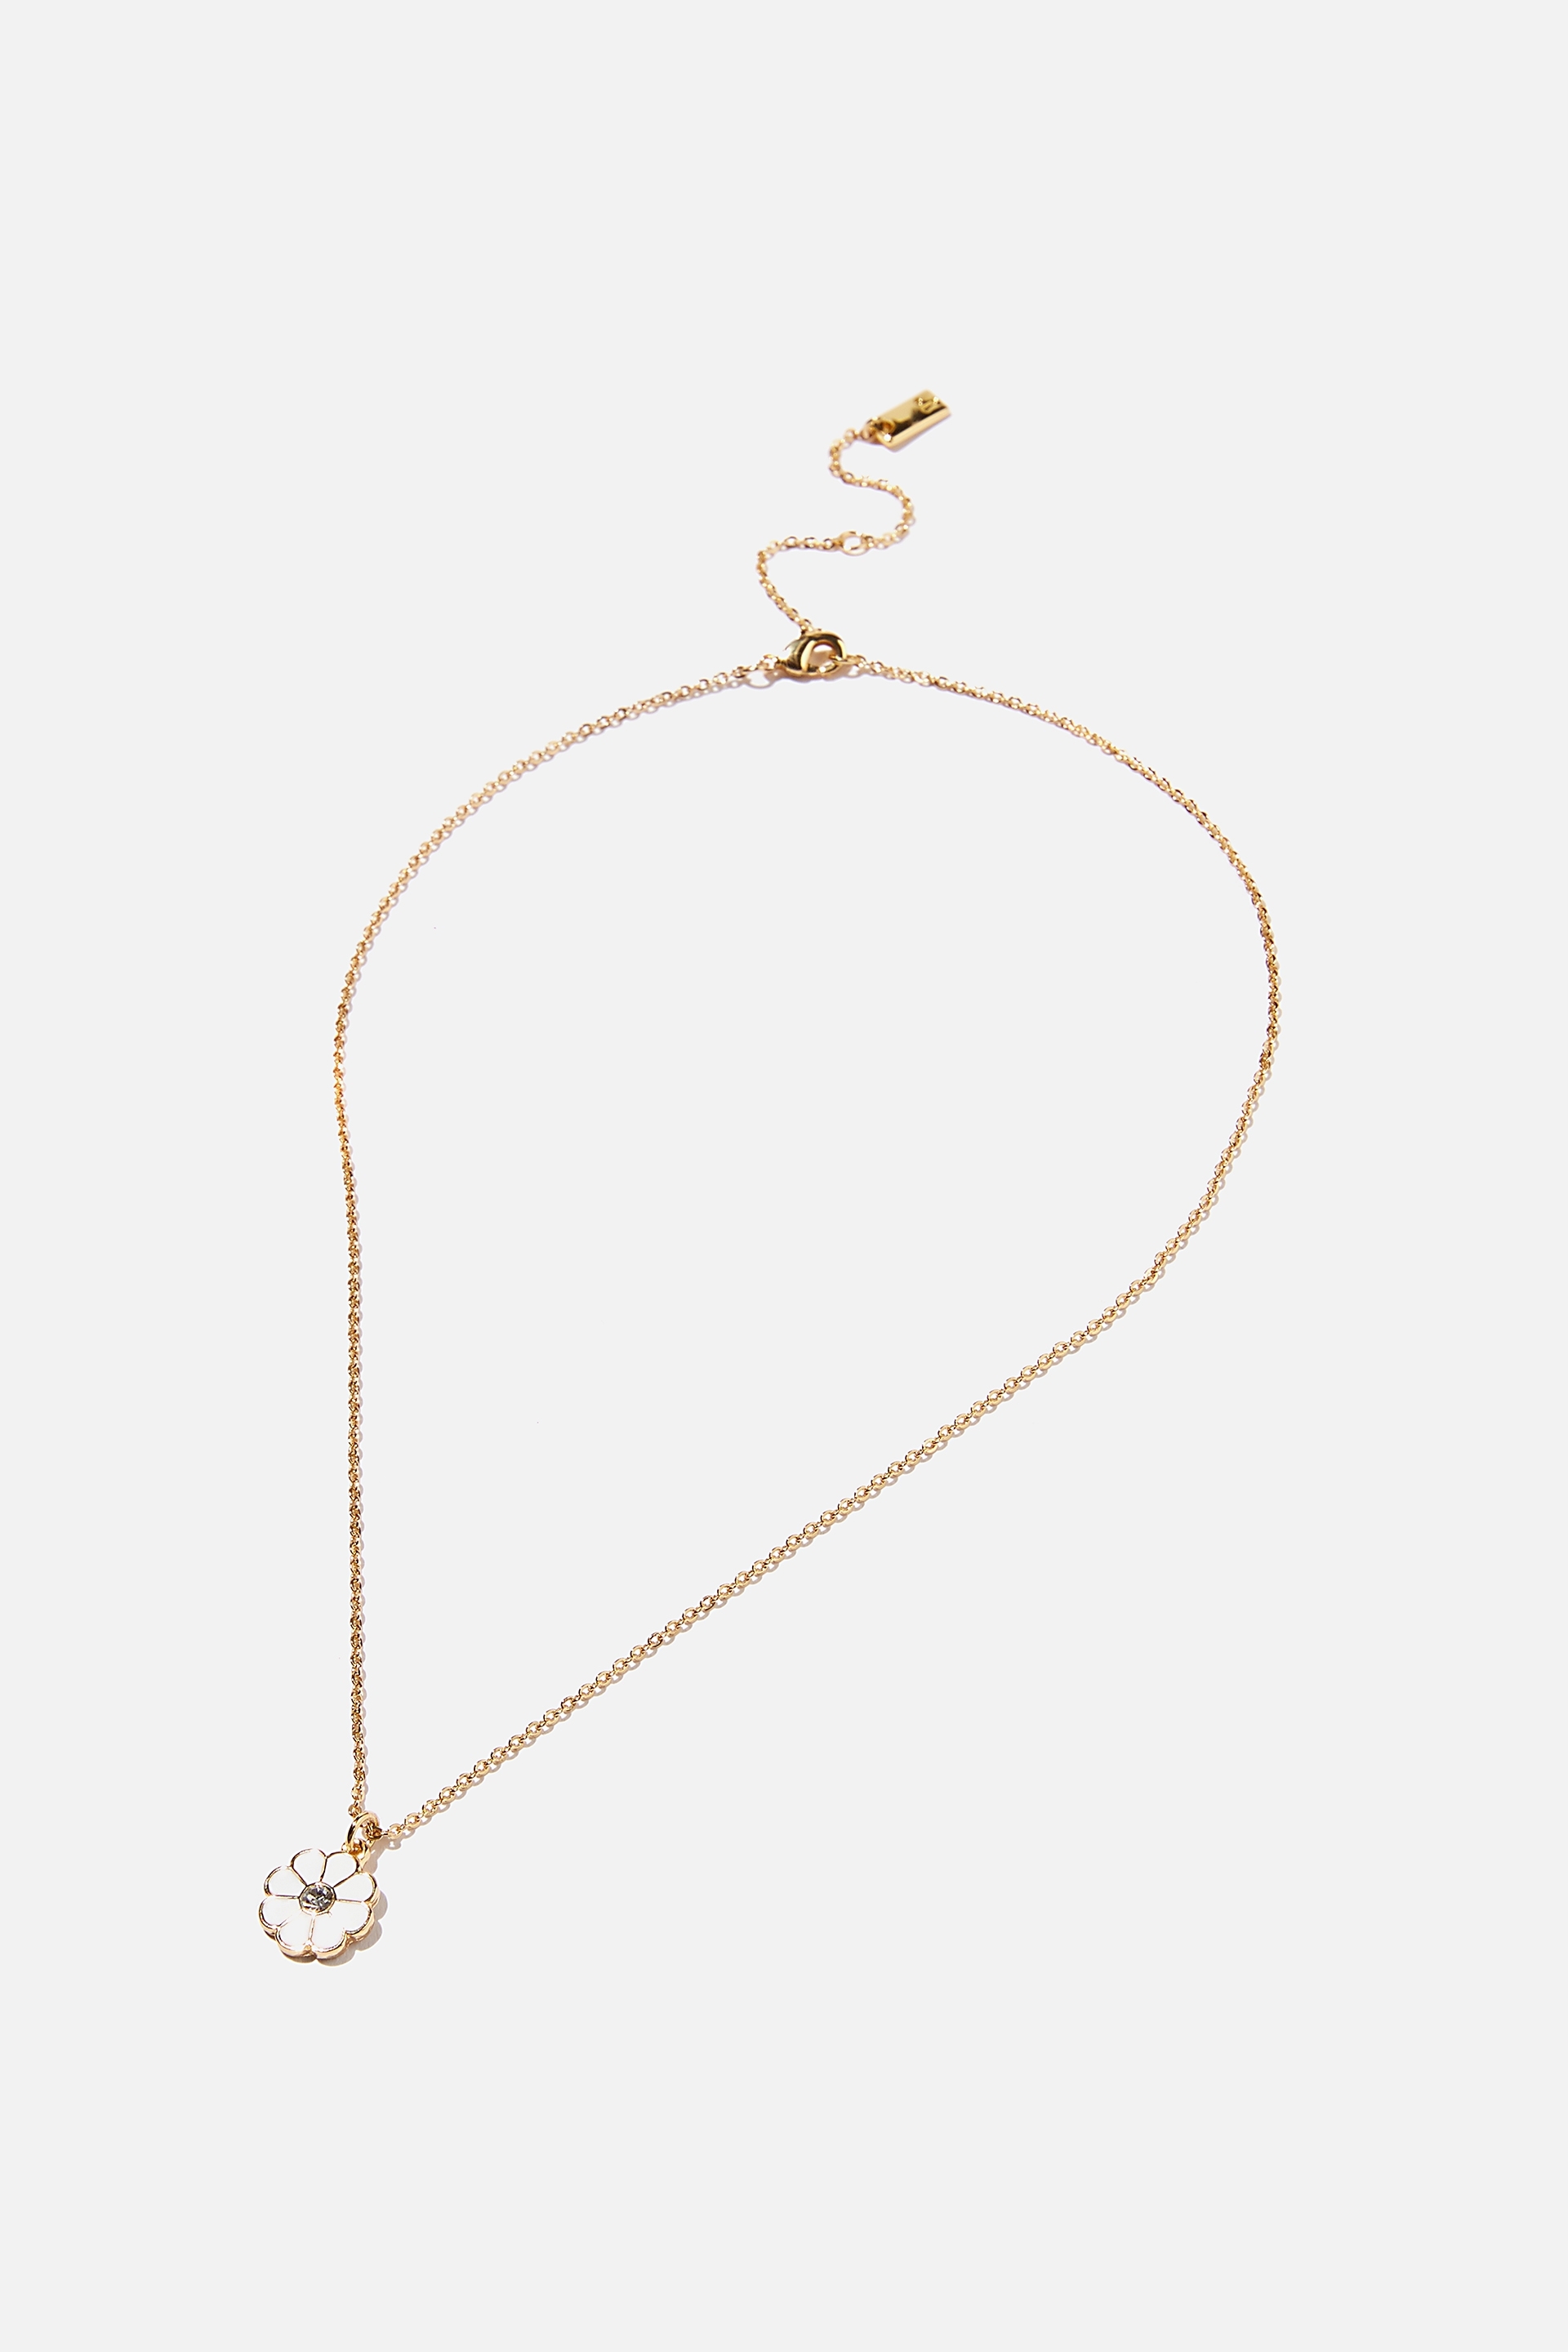 Rubi - Premium Pendant Necklace - Gold plated daisy stone